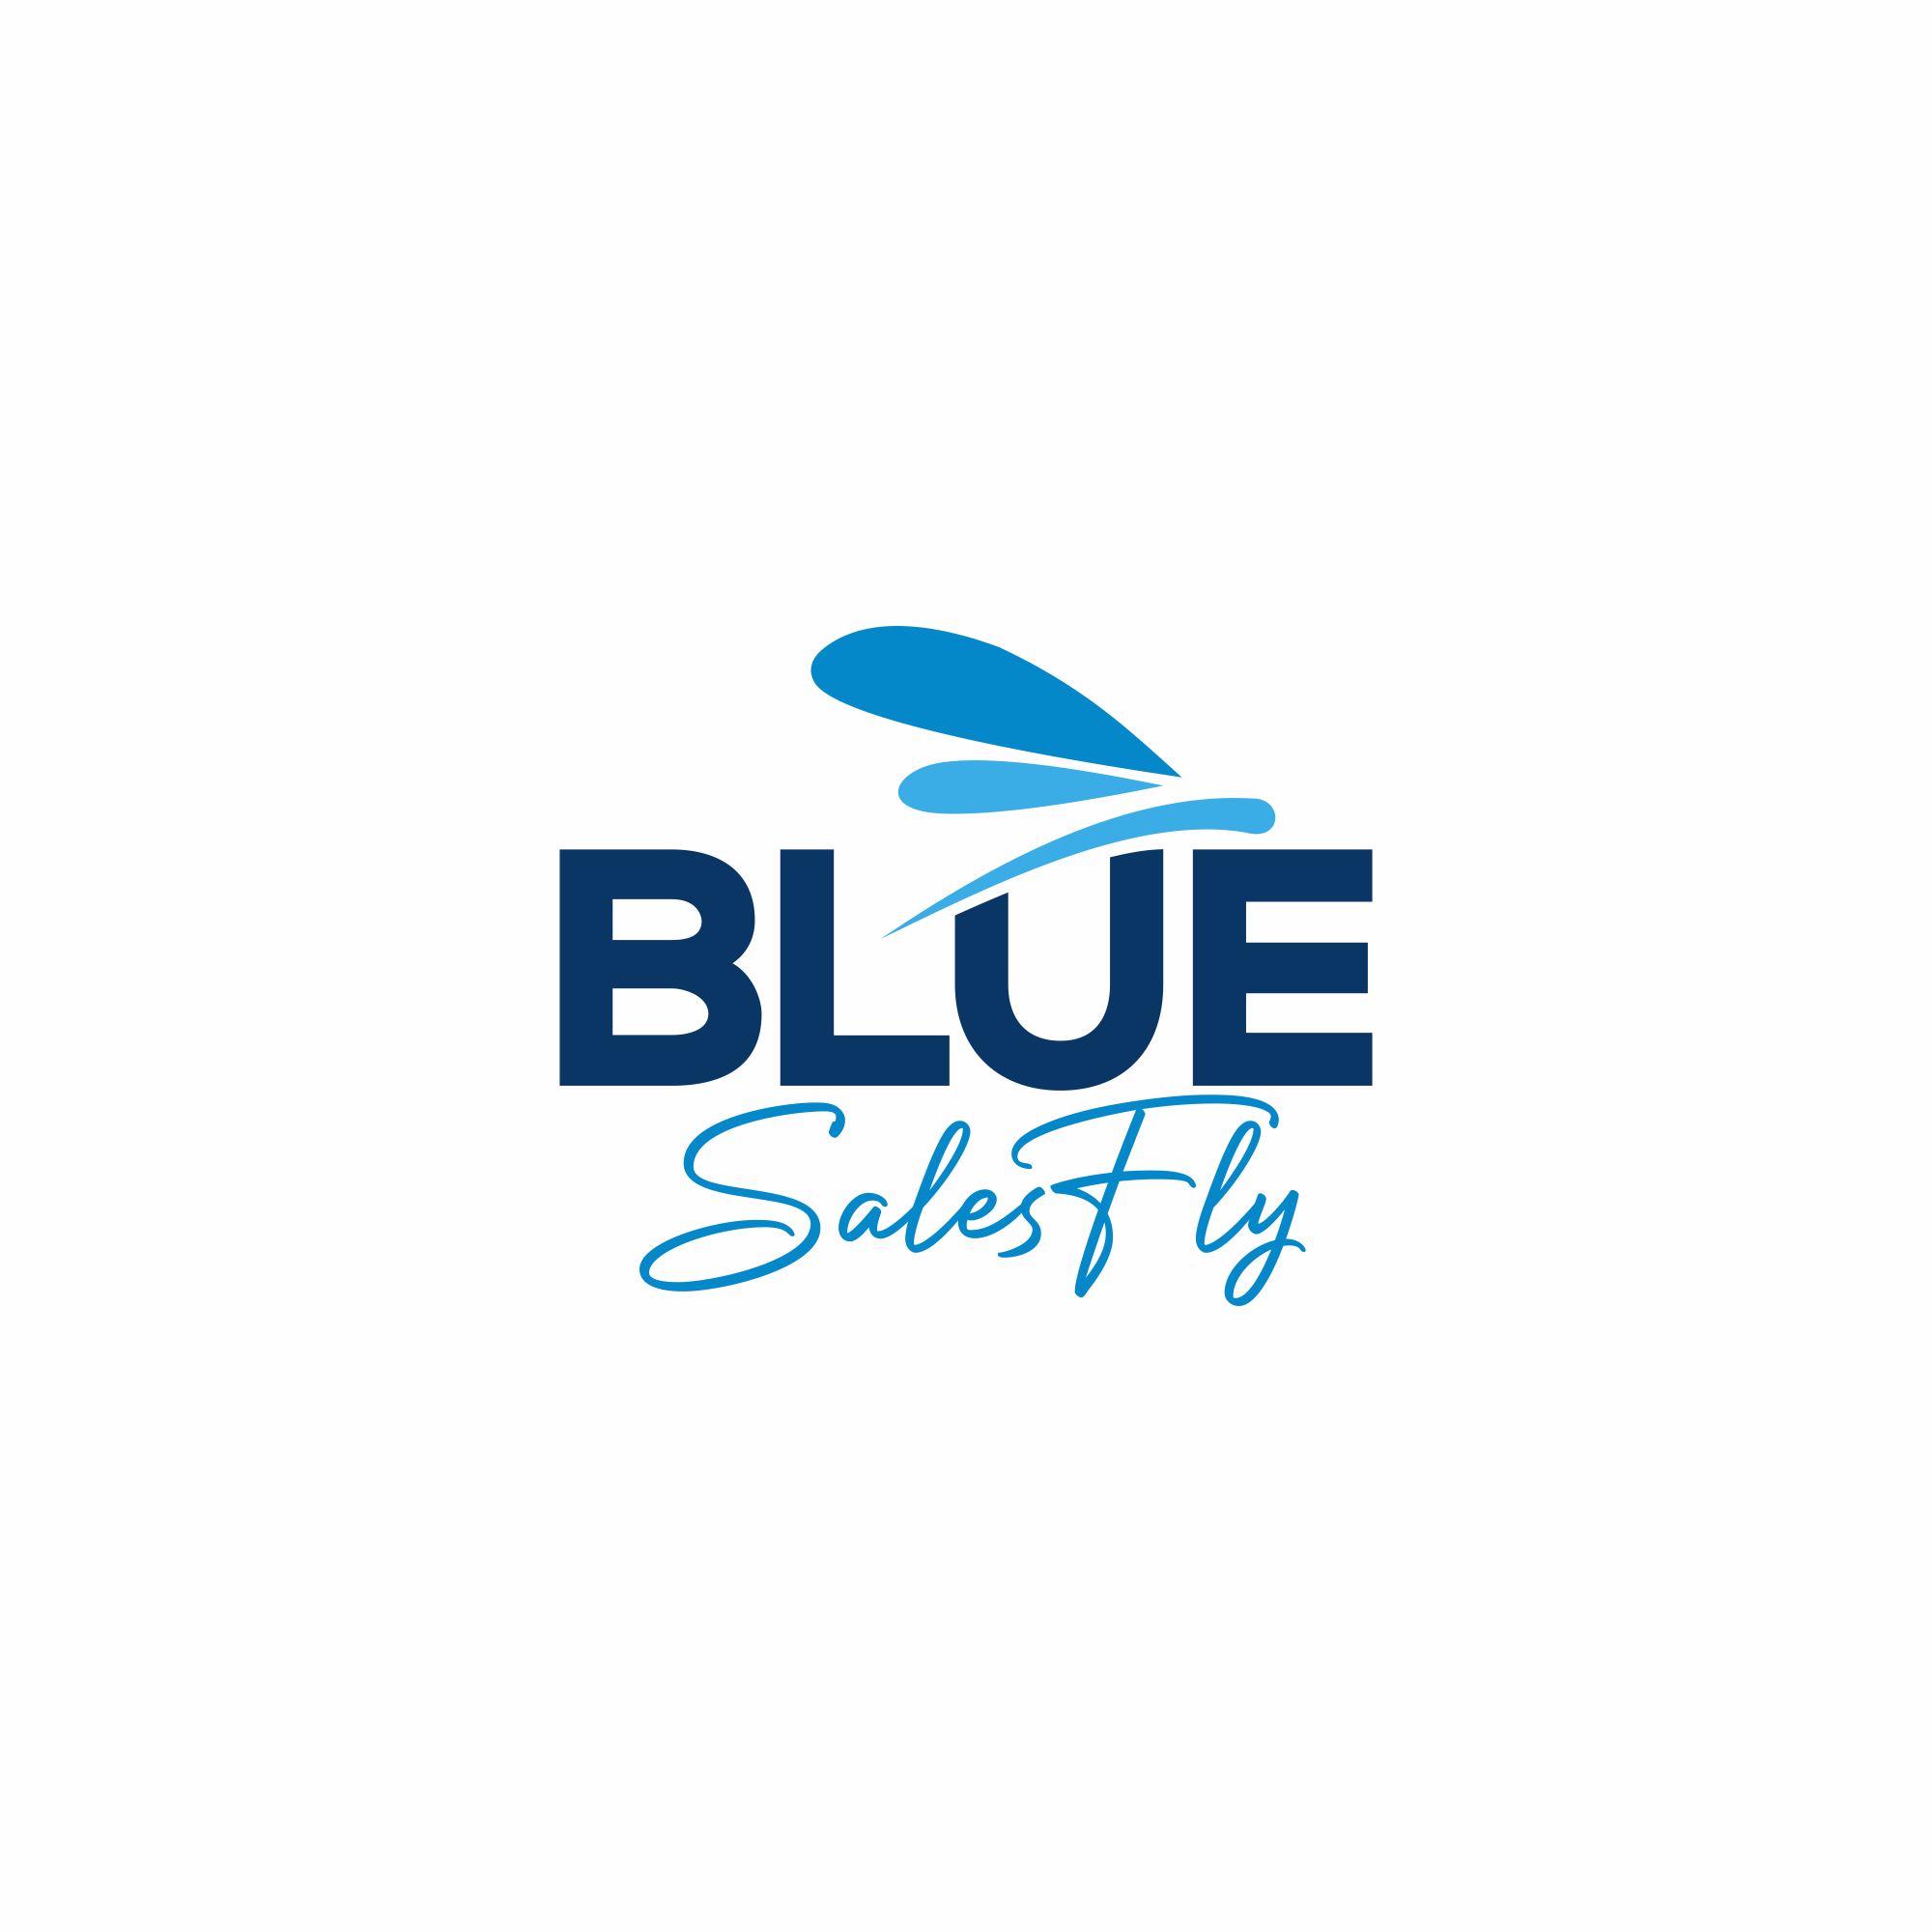 Blue SalesFly 